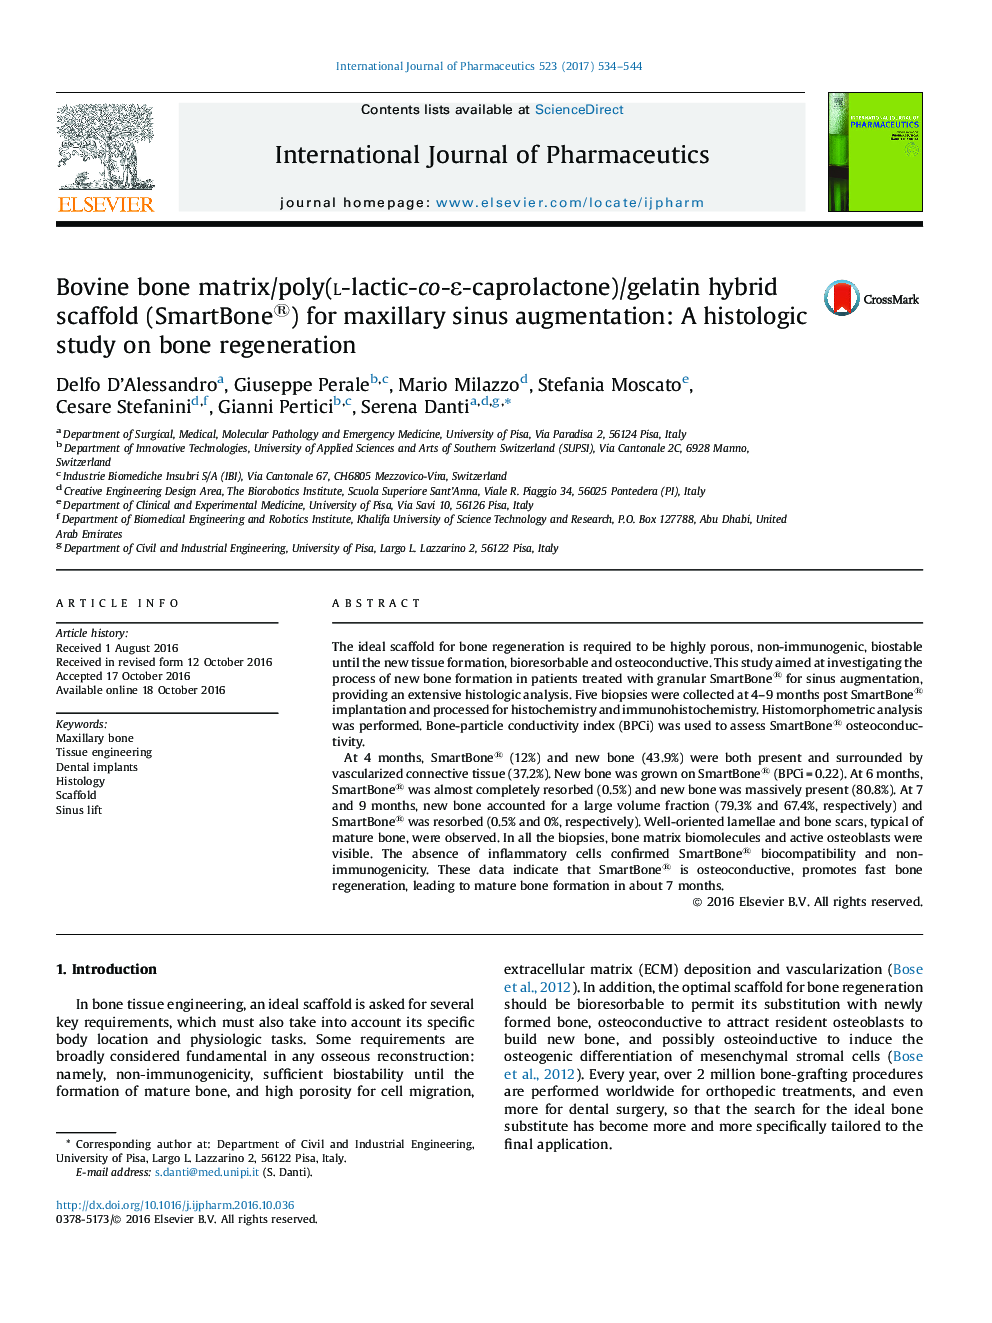 Bovine bone matrix/poly(l-lactic-co-Îµ-caprolactone)/gelatin hybrid scaffold (SmartBone®) for maxillary sinus augmentation: A histologic study on bone regeneration